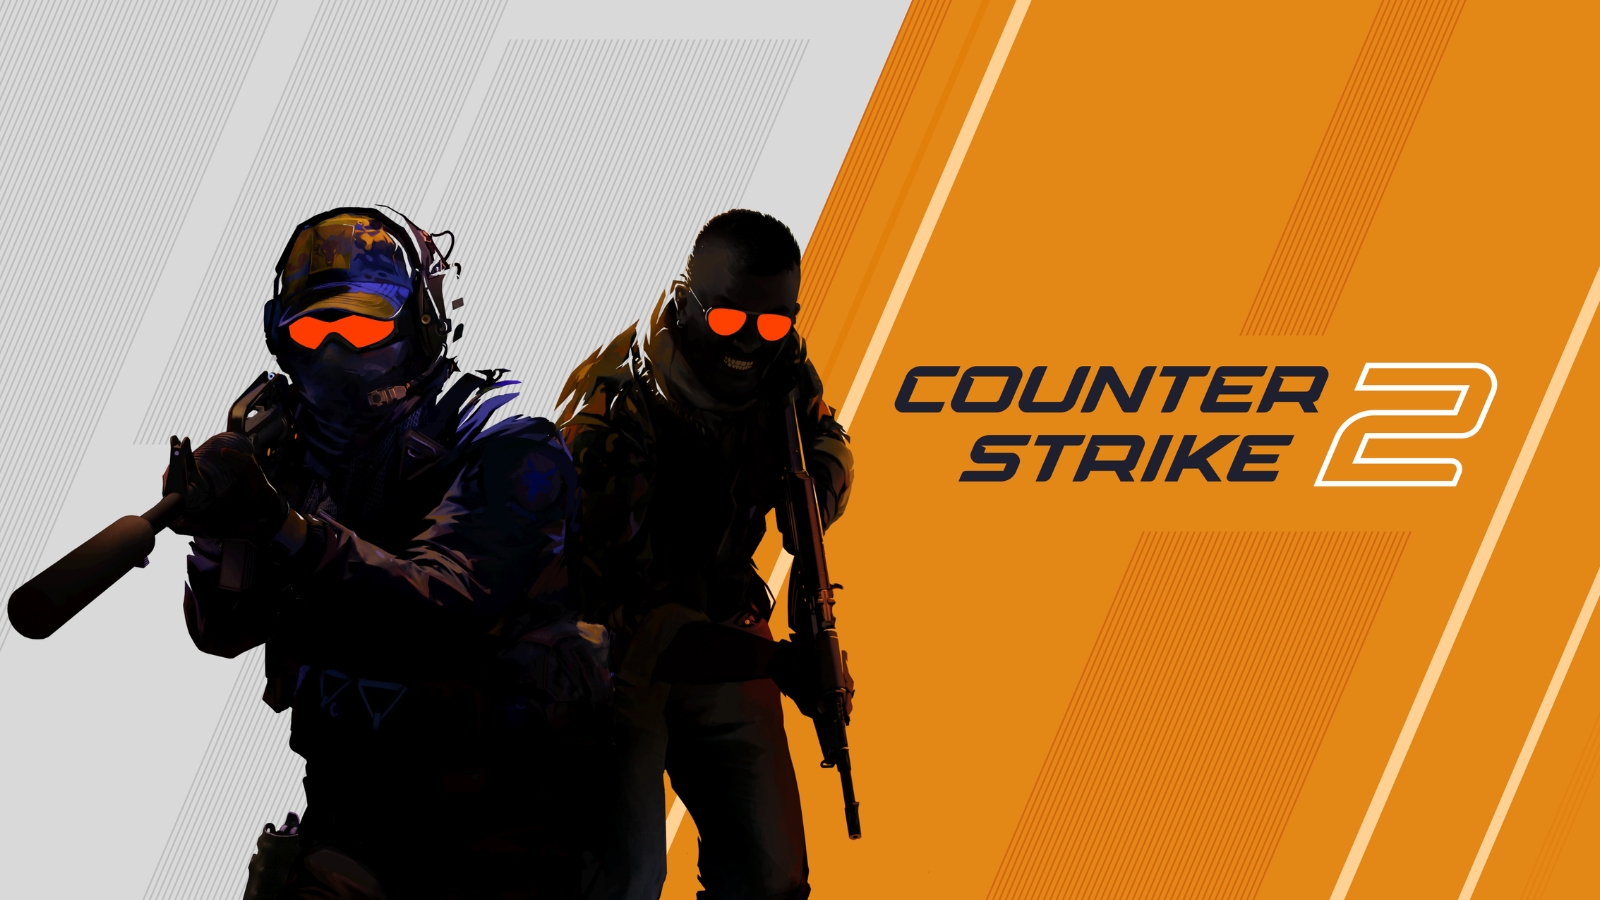 Steam Community :: Counter-Strike 2